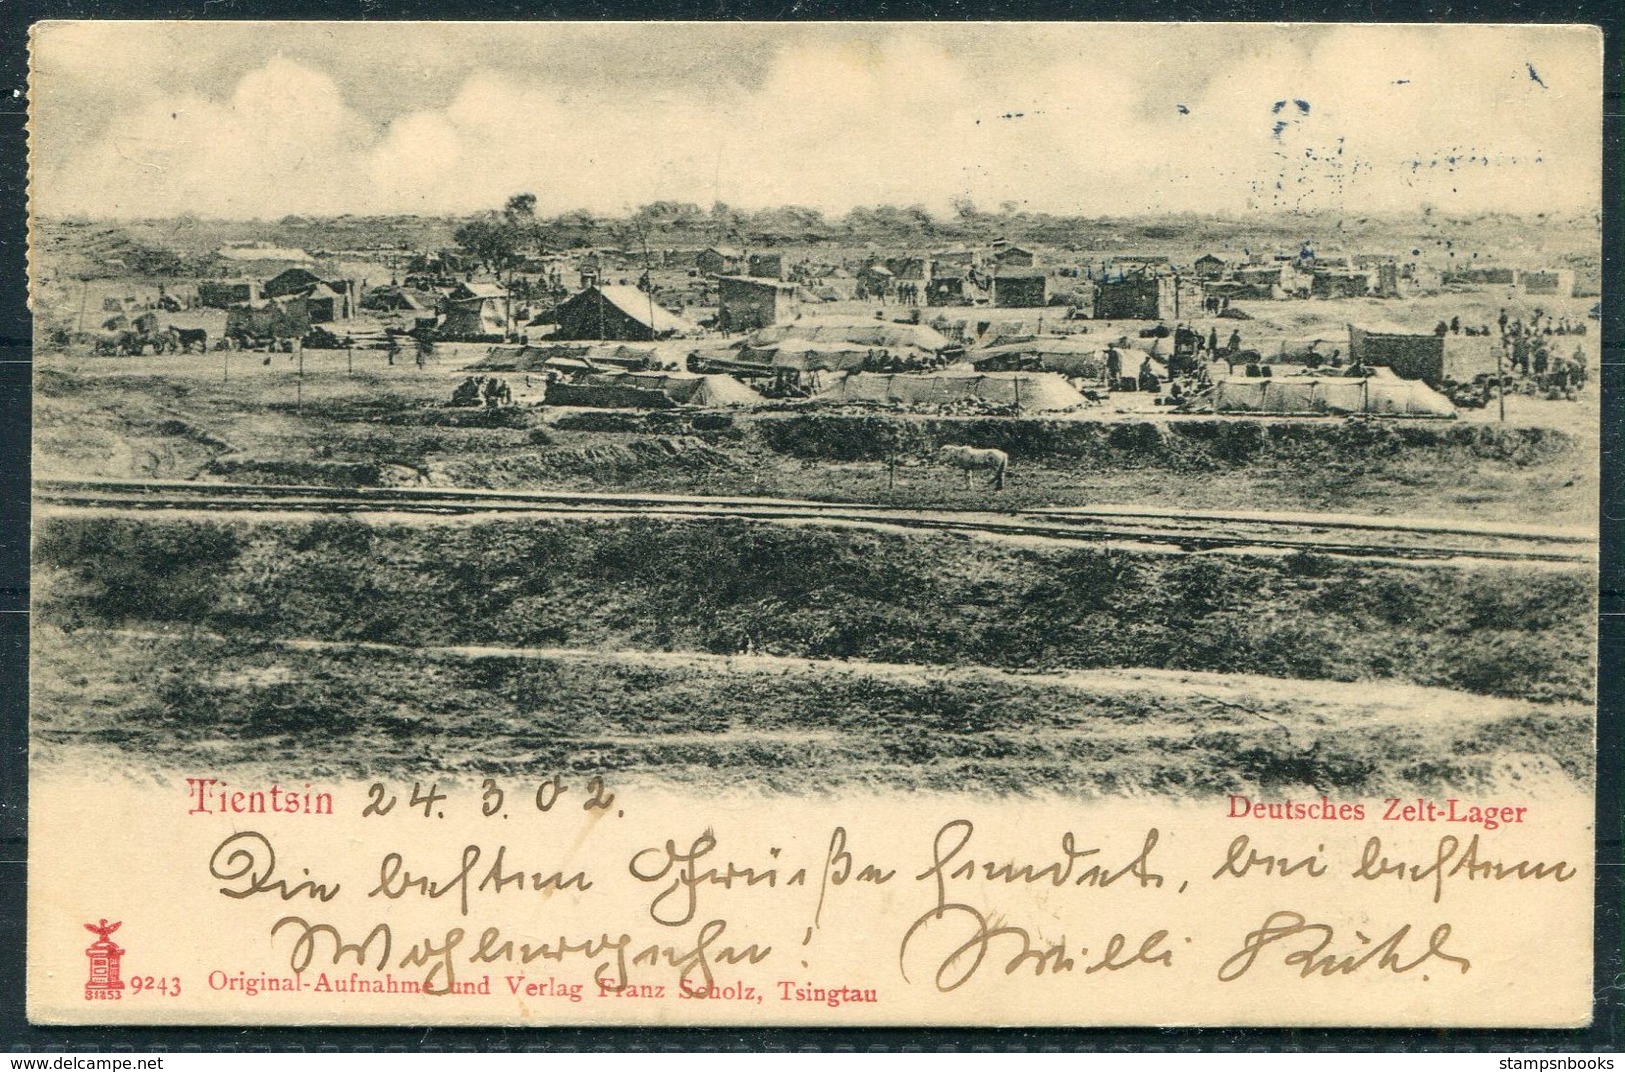 1902 China Tientsin, Deutsches Zelt-Lager, Scholz Postcard. S.B. Ostas. Bestaz. Brigade, Train Kompagnie - Berlin German - Covers & Documents